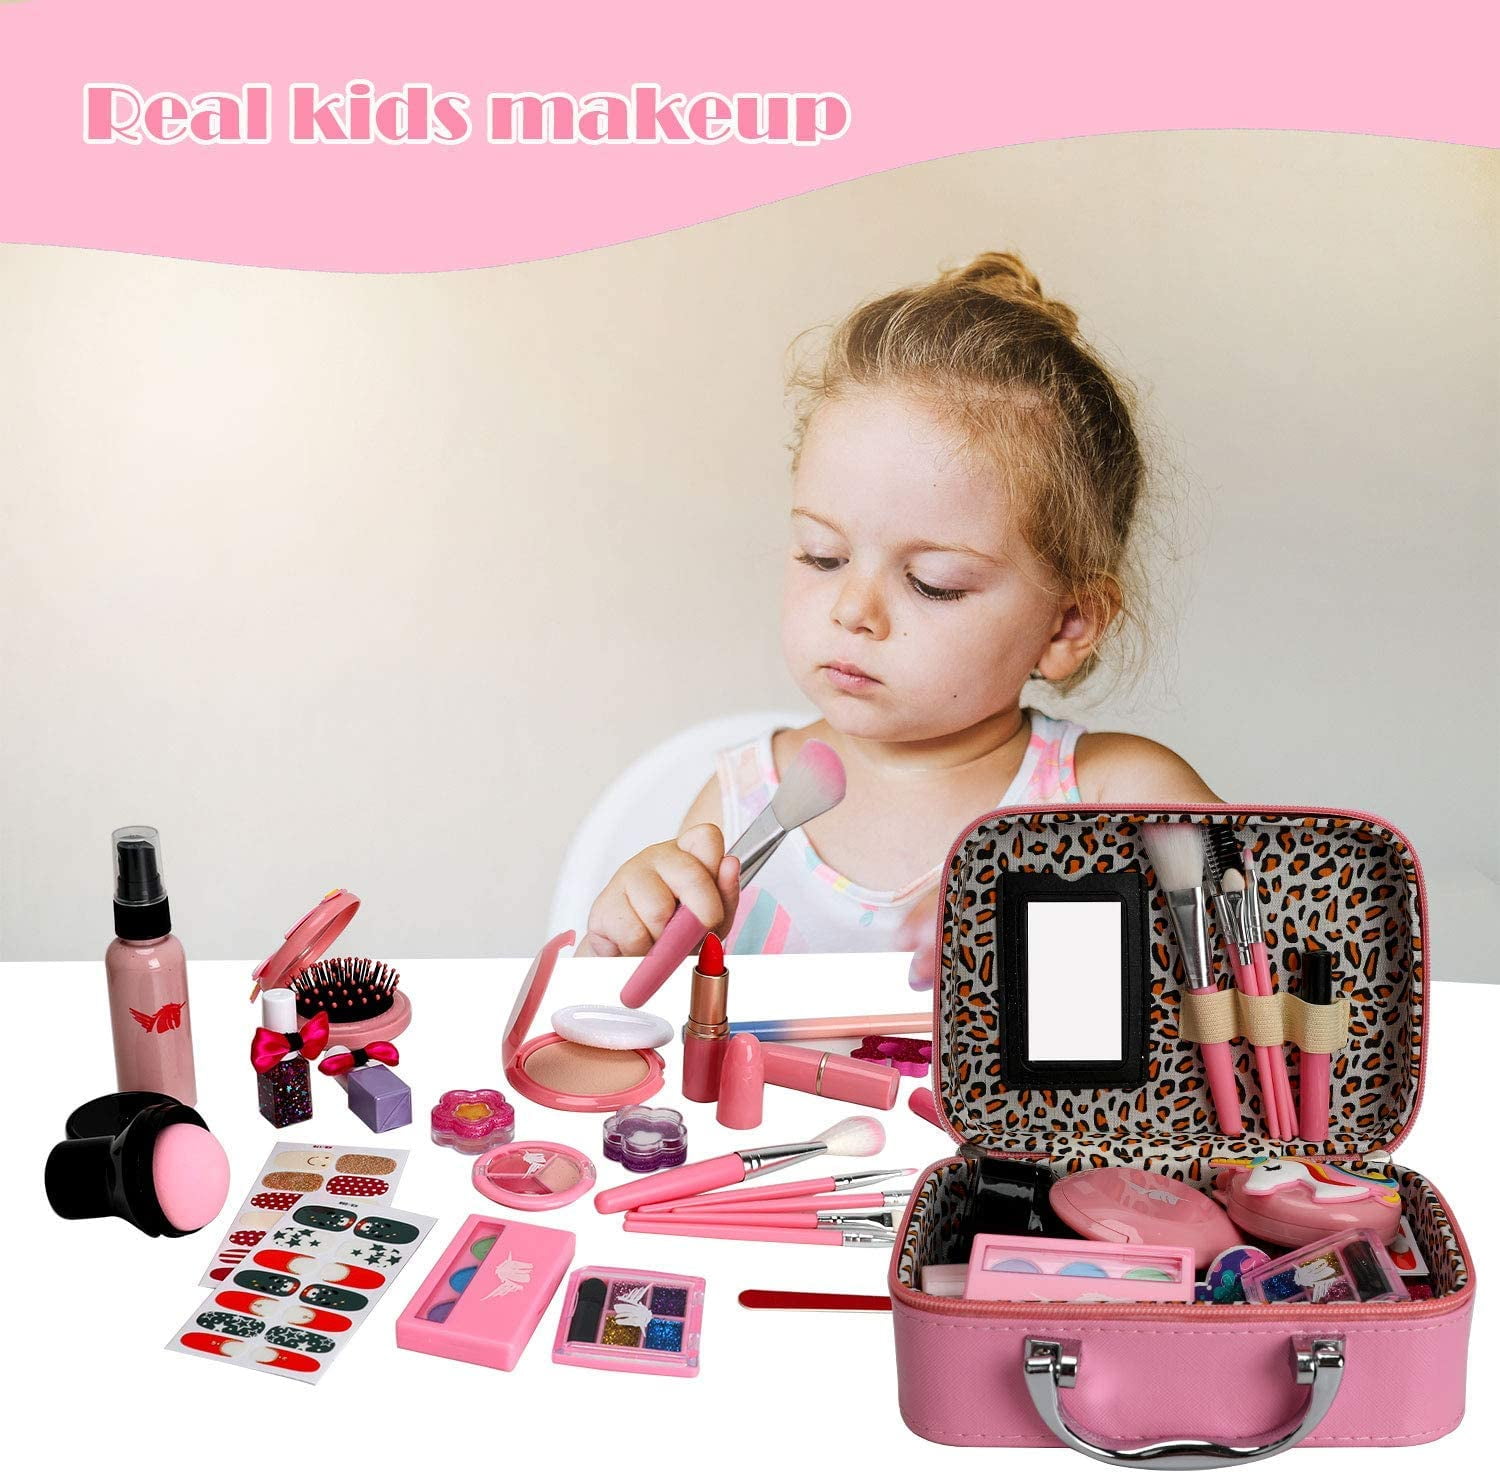 Kit de maquillage Flybay Kids pour fille, Kit de Maroc